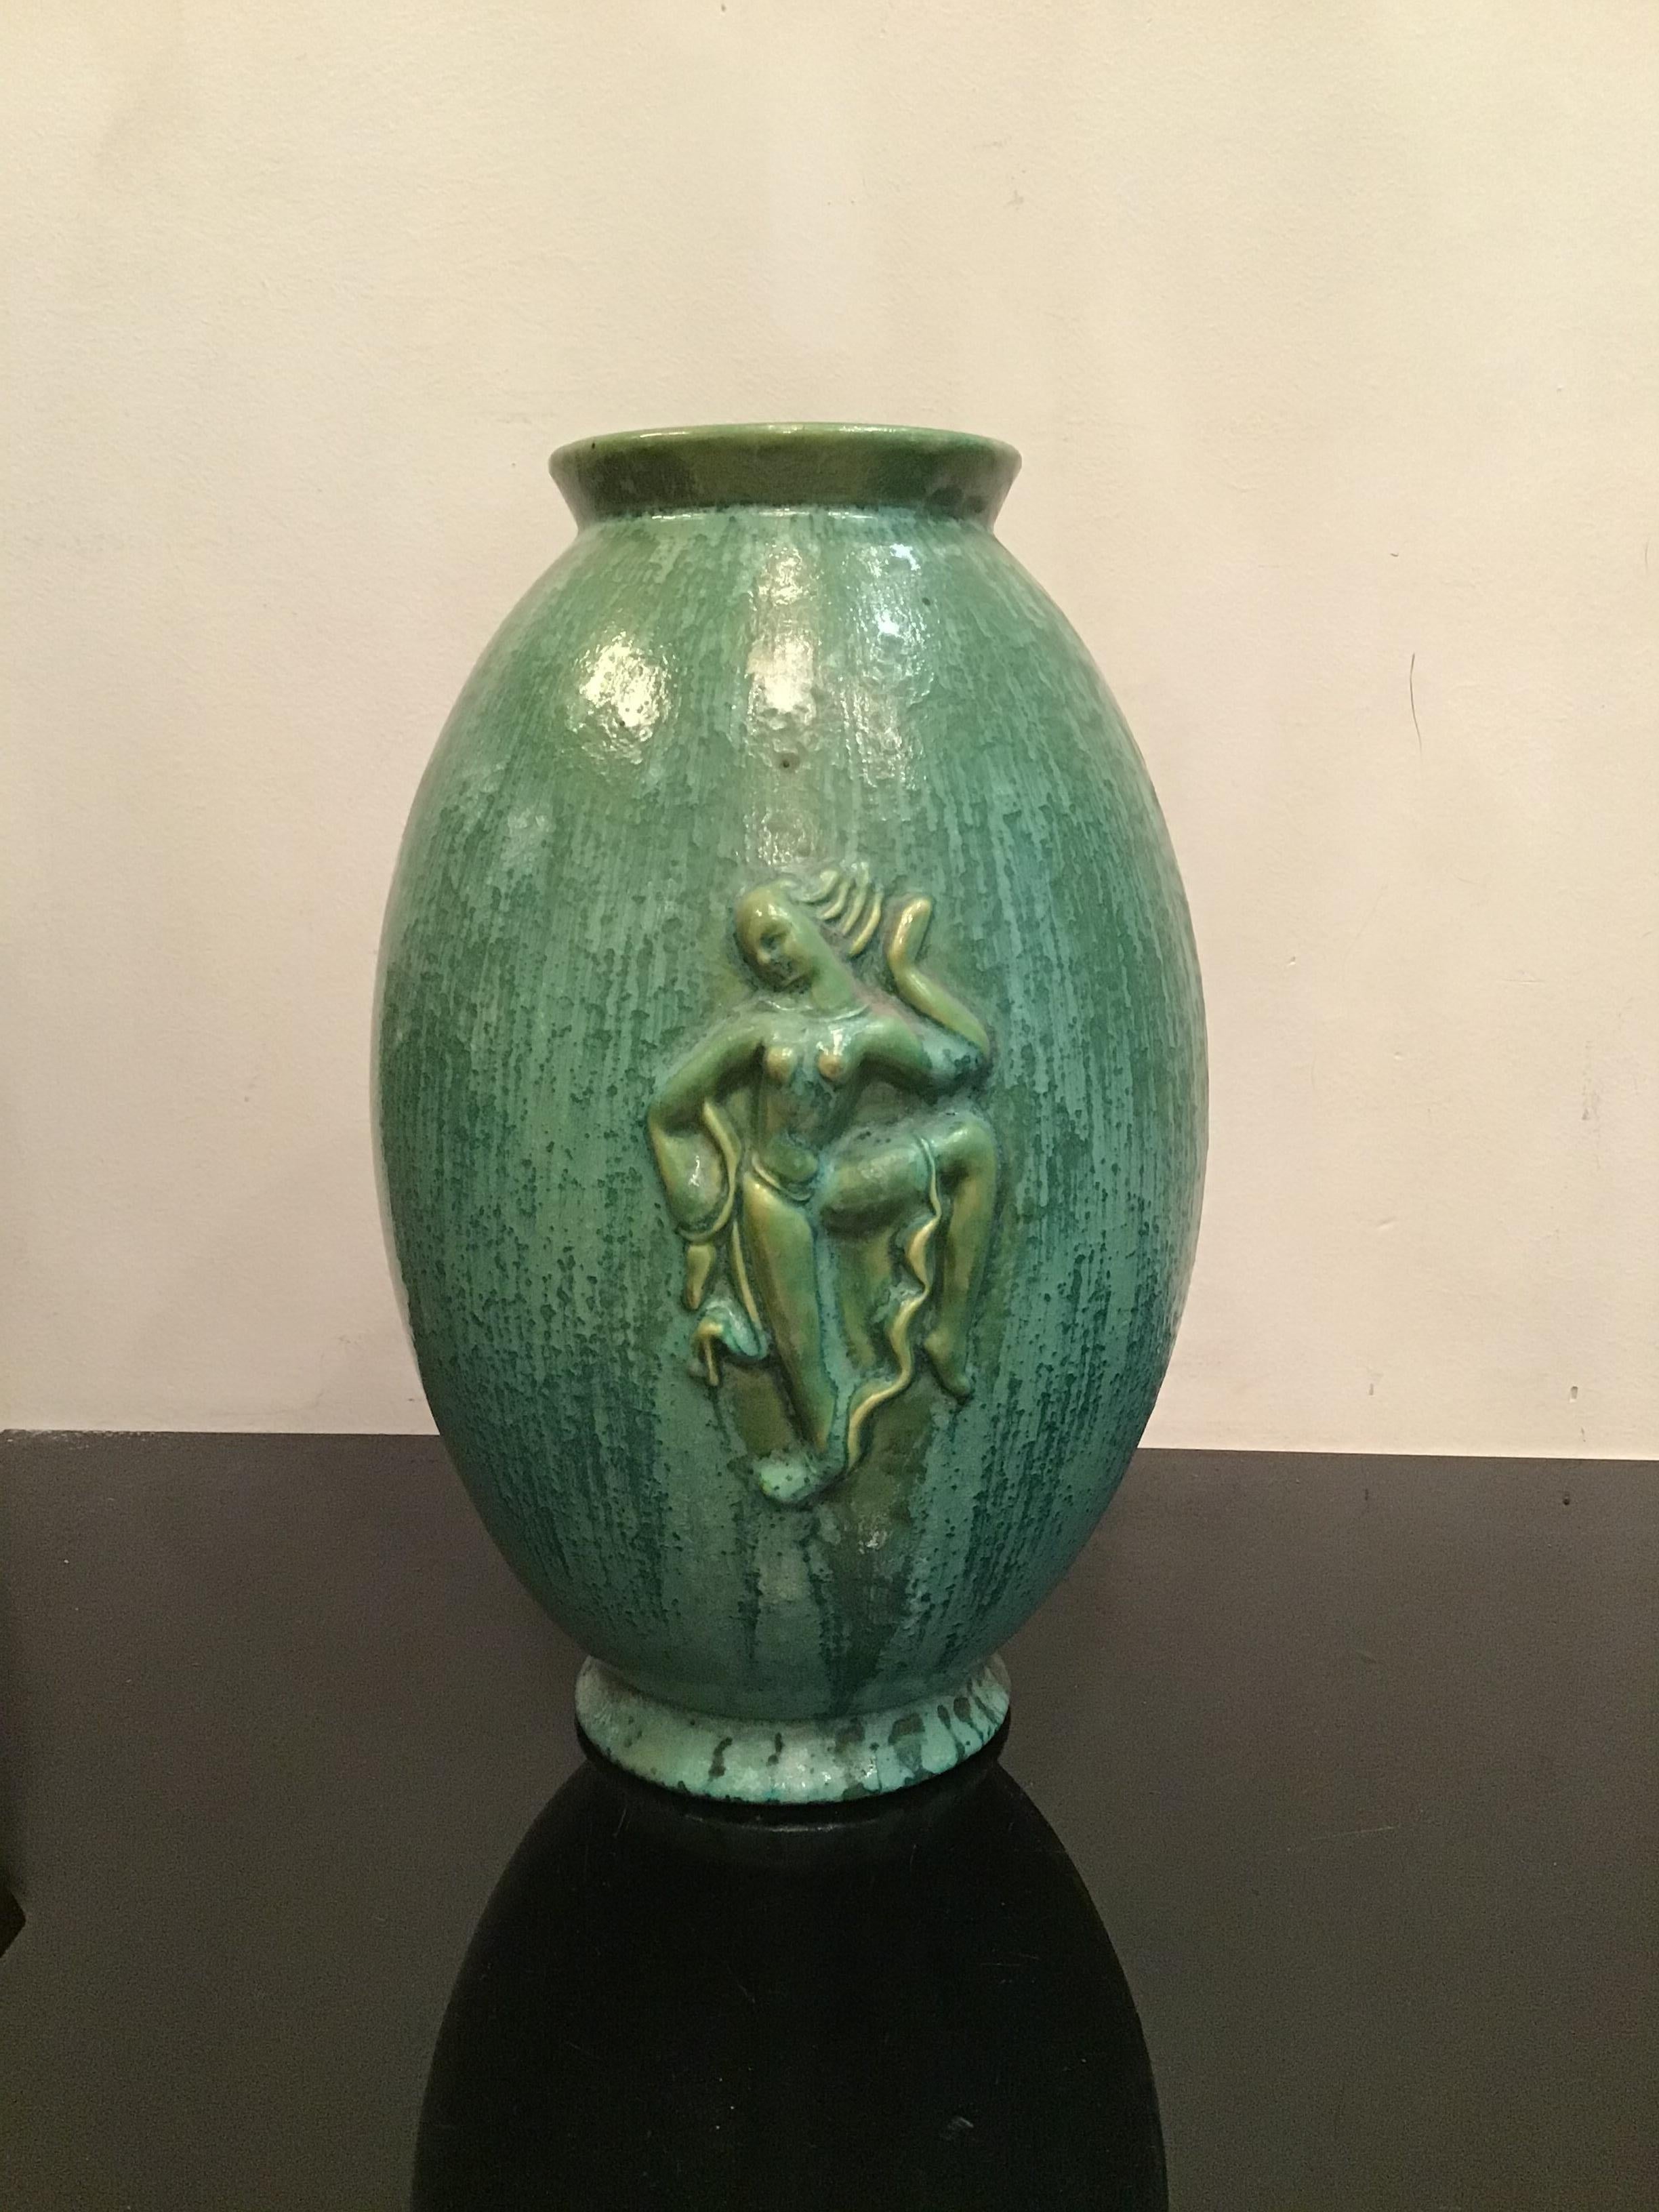 Lavenia Angelo Biancini Maiolica vase, 1930, Italy.